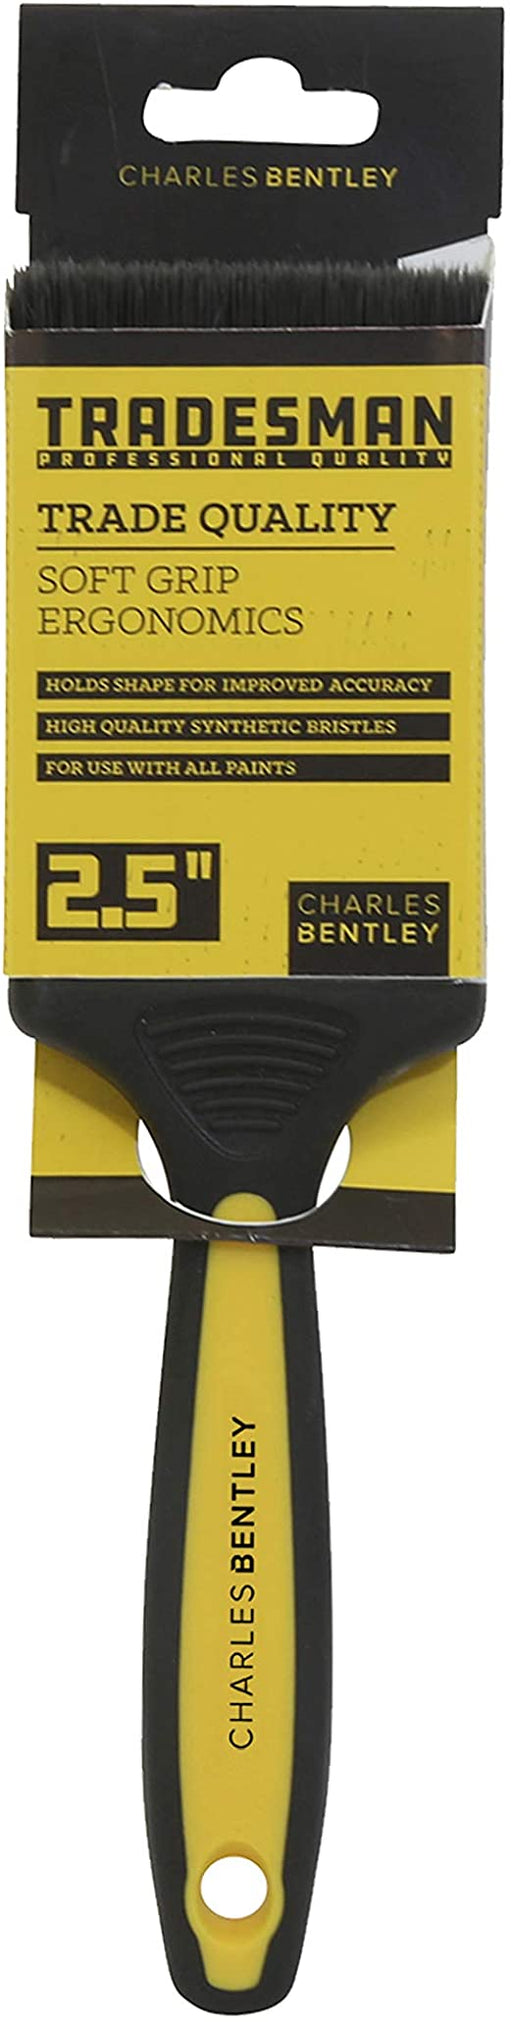 Charles Bentley Tradesman Paint Brush 2.5" - DY/990/2.5